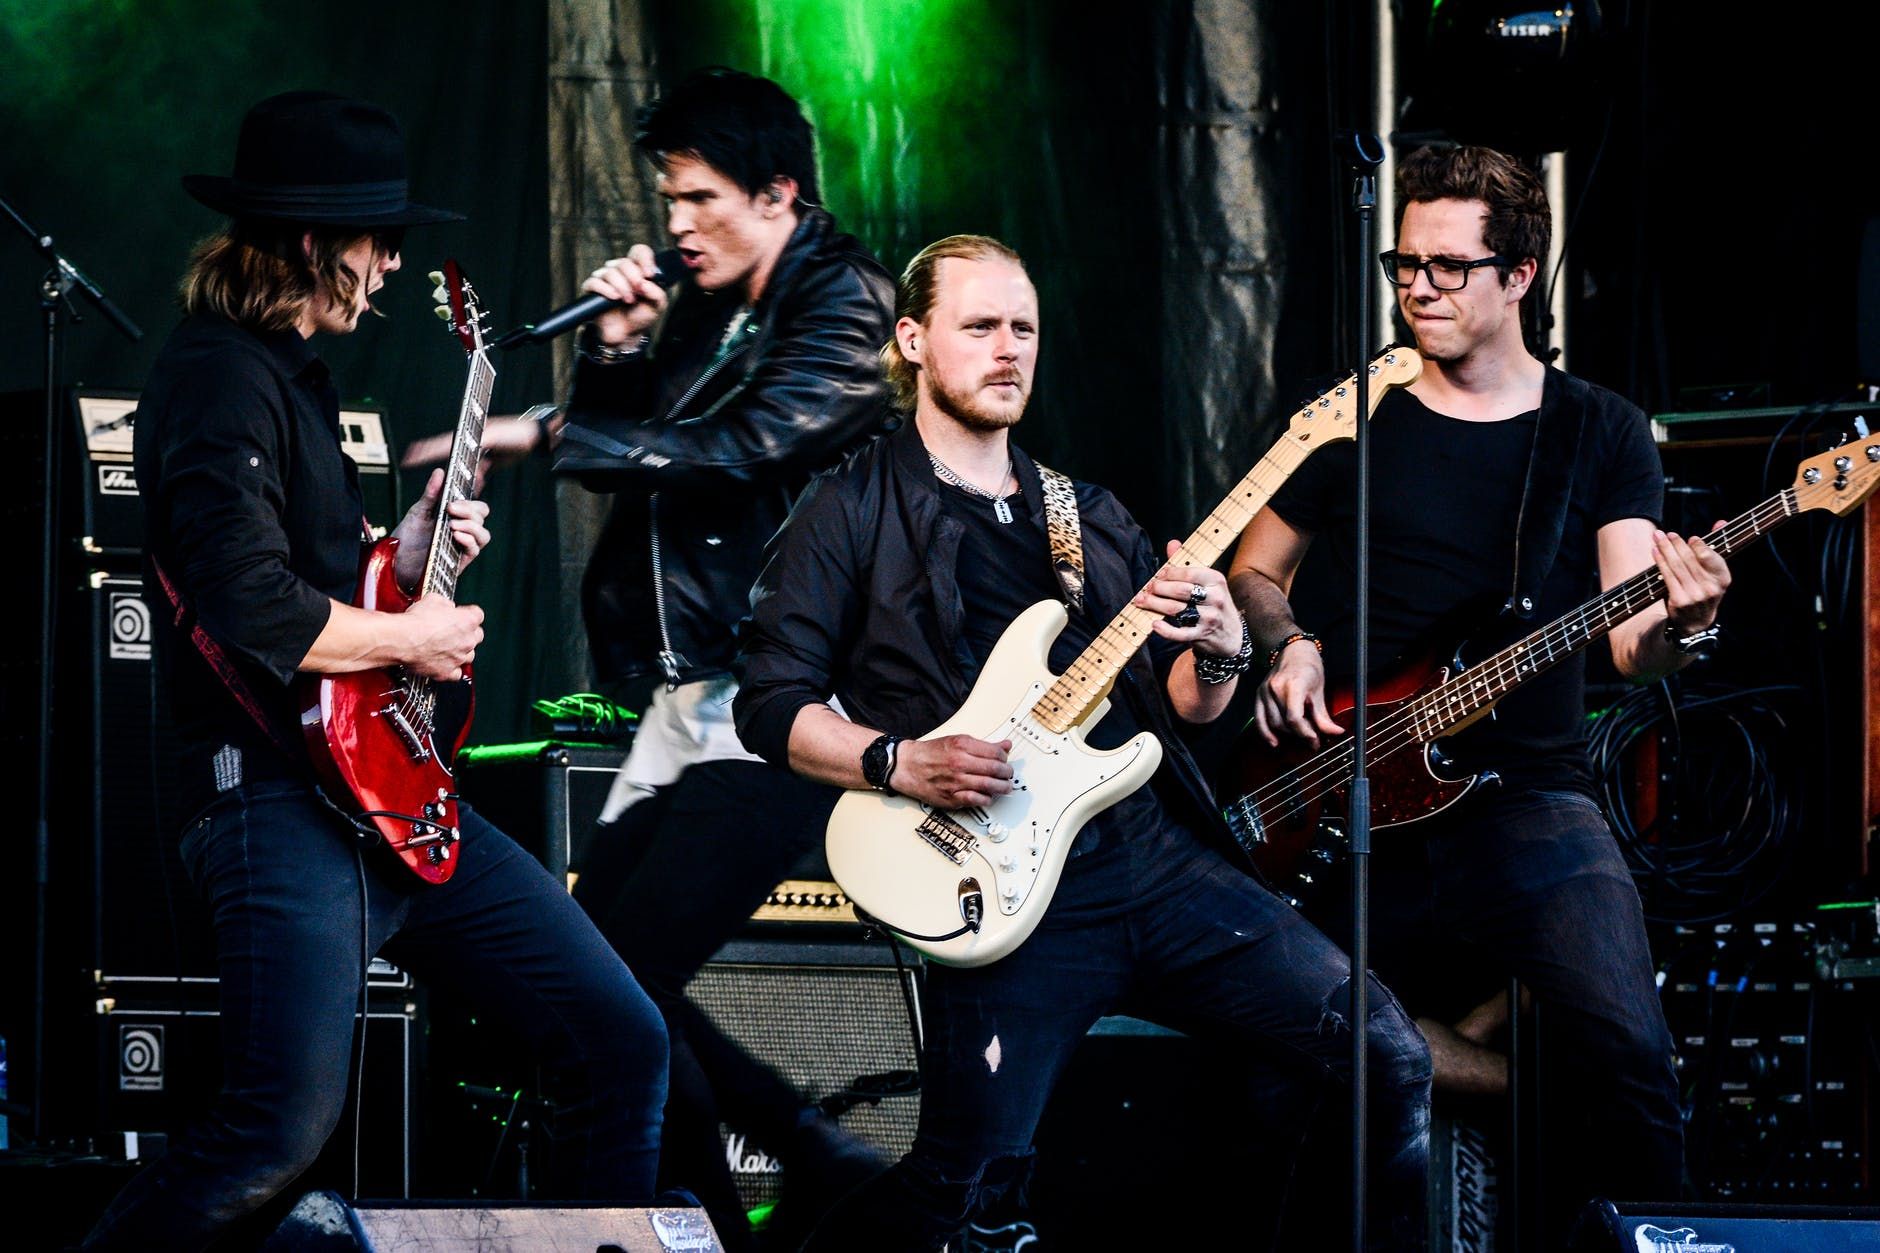 Membros de uma banda de rock tocando ao vivo